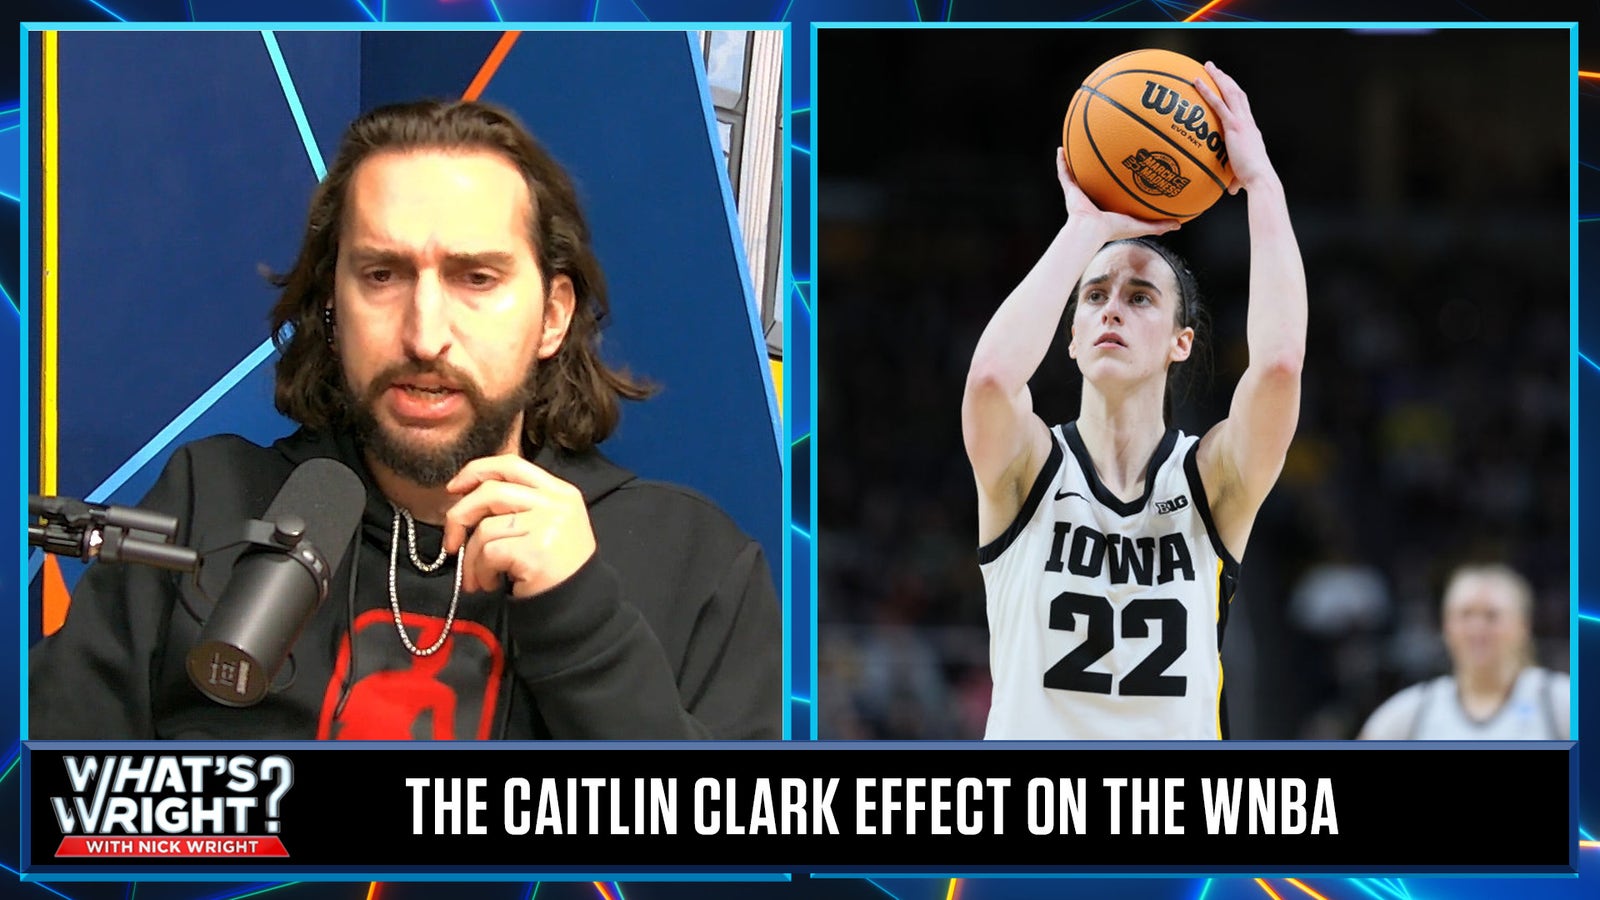 How the Caitlin Clark effect raises economic pressure on WNBA